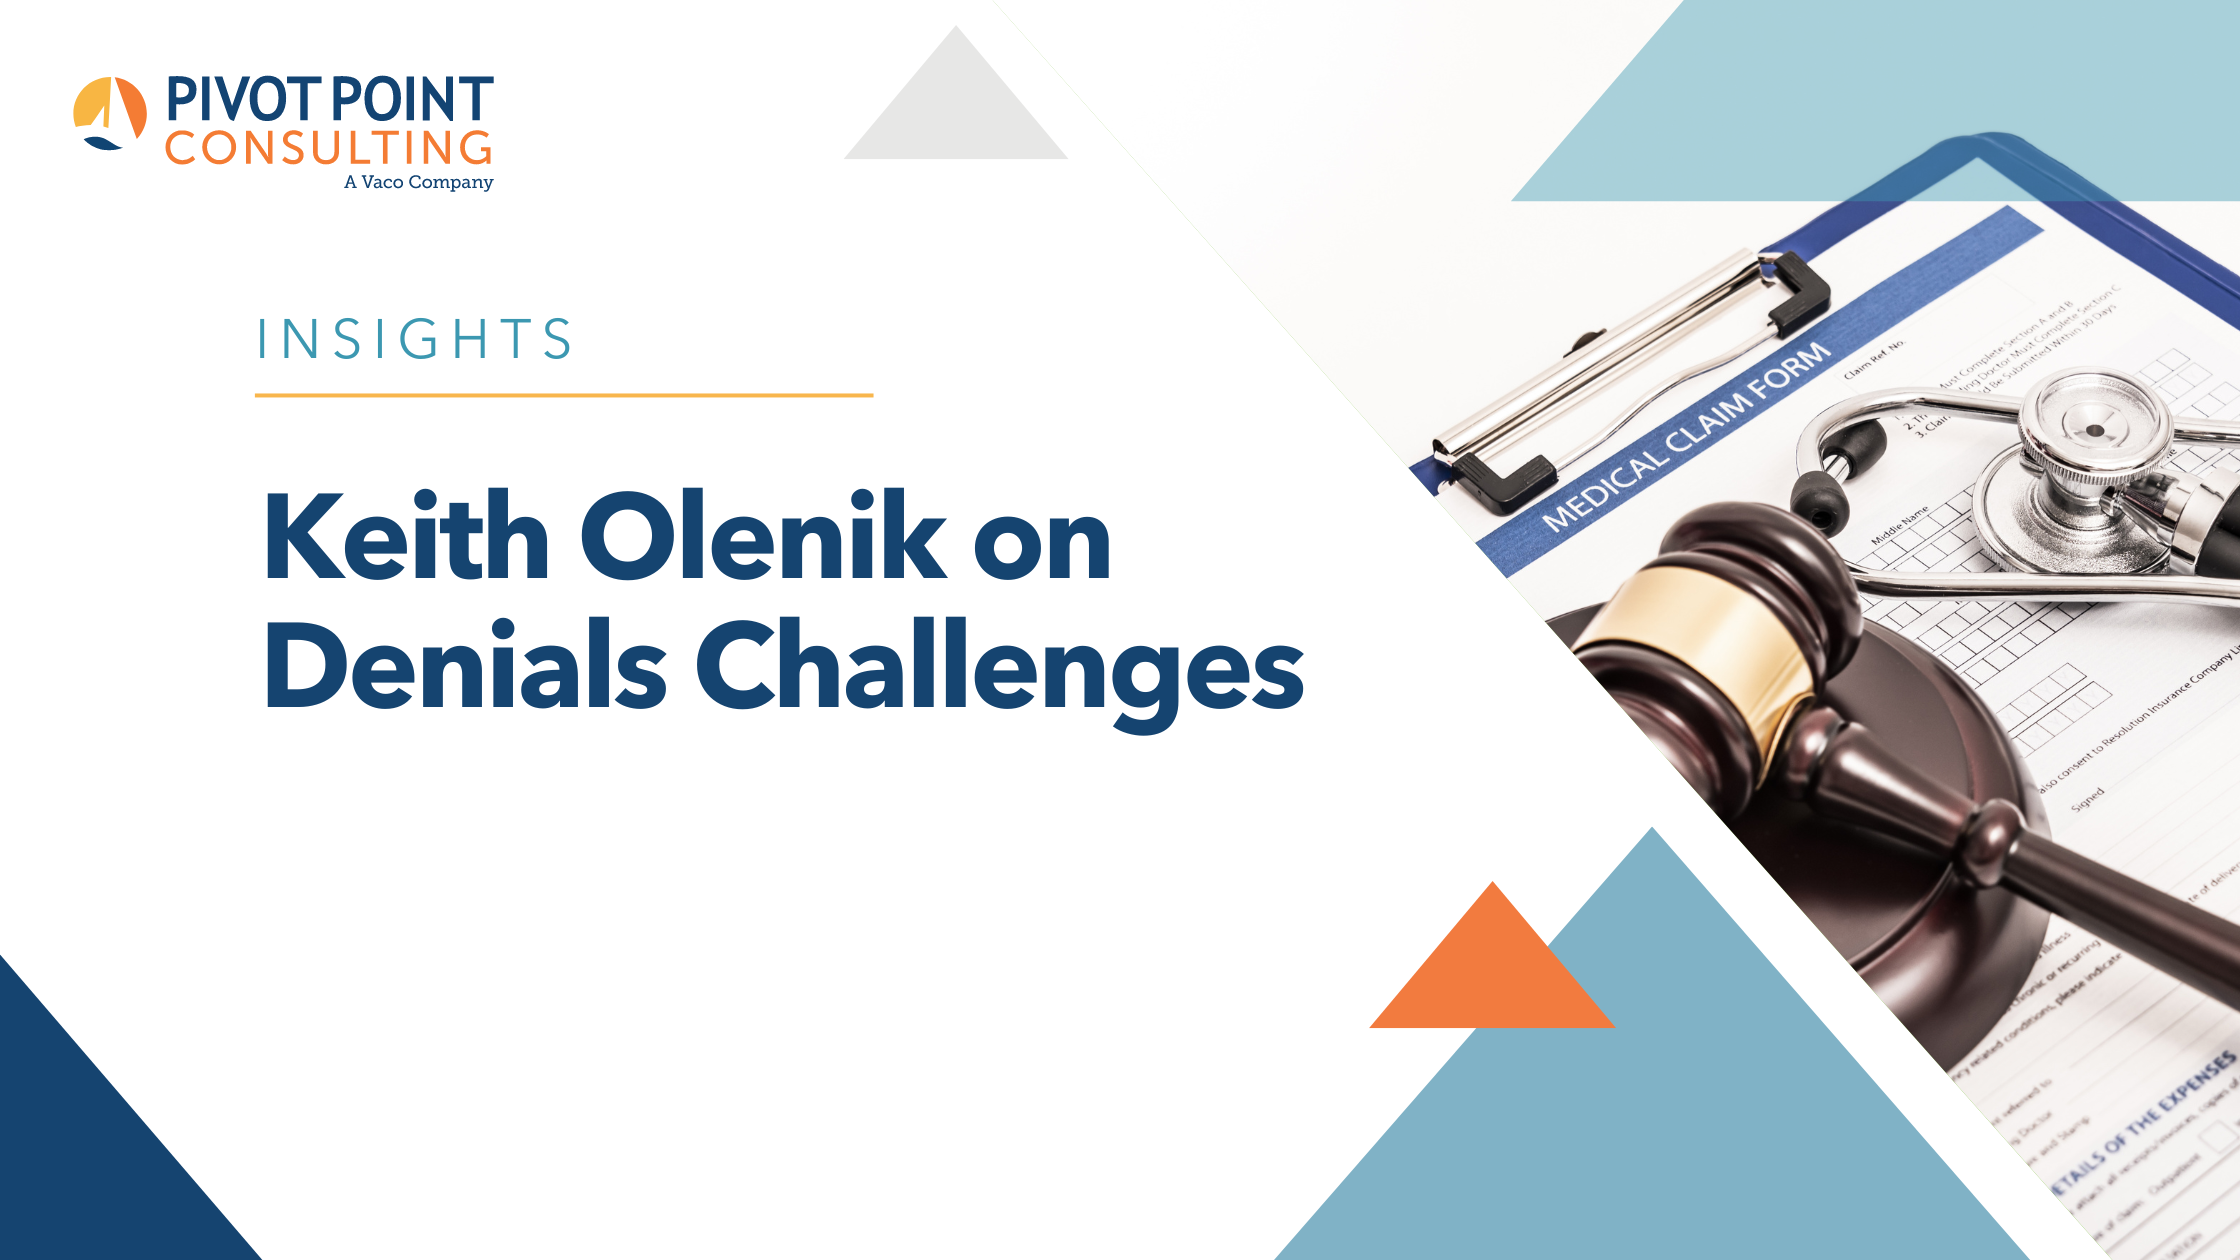 Keith Olenik on Denials Challenges blog post